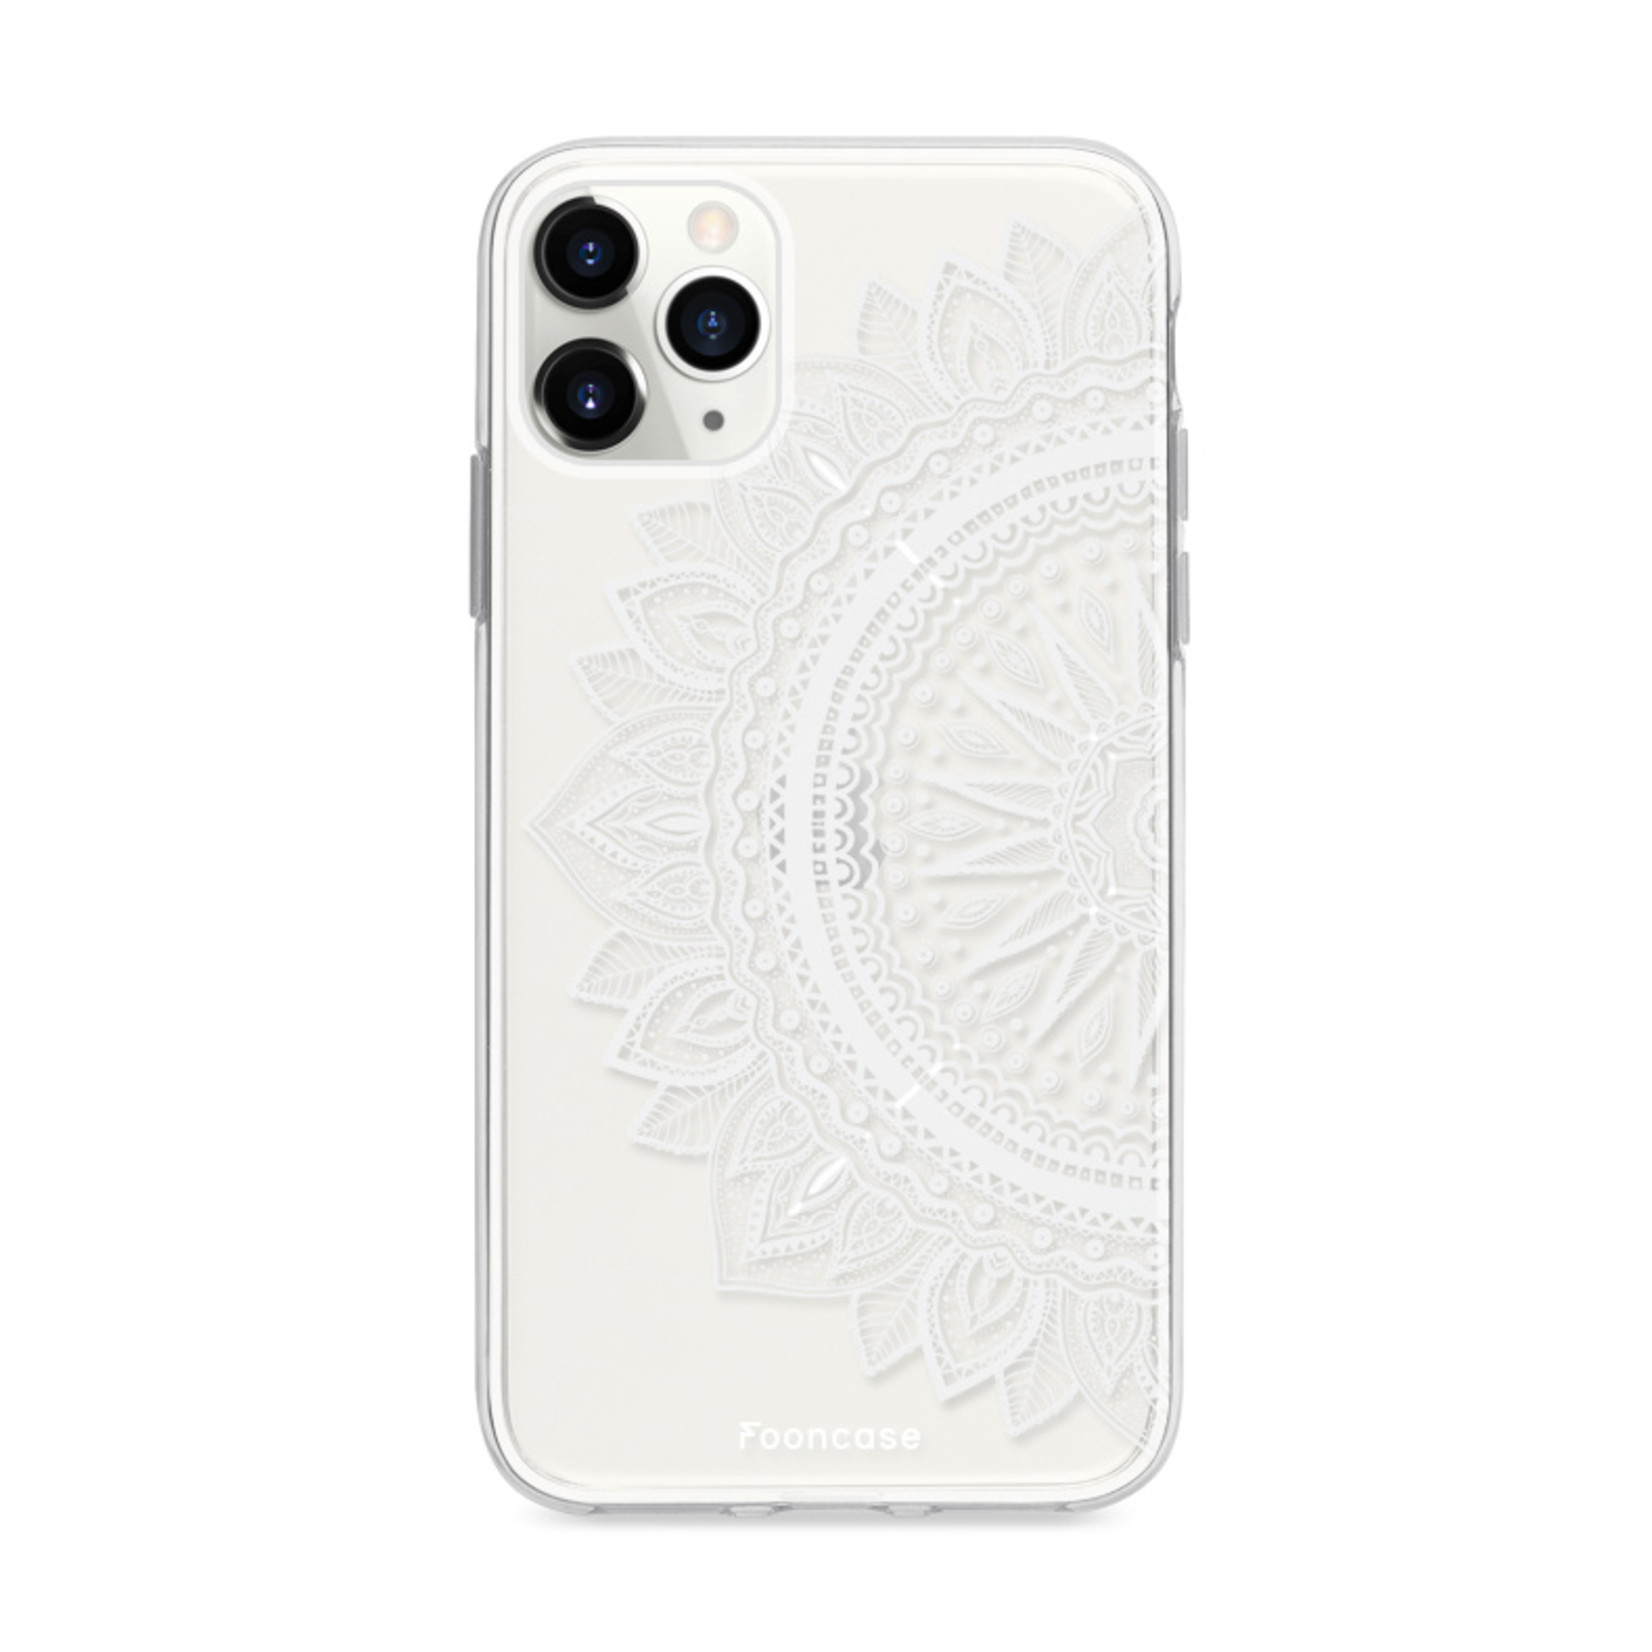 FOONCASE iPhone 11 Pro Max hoesje TPU Soft Case - Back Cover - Mandala / Ibiza